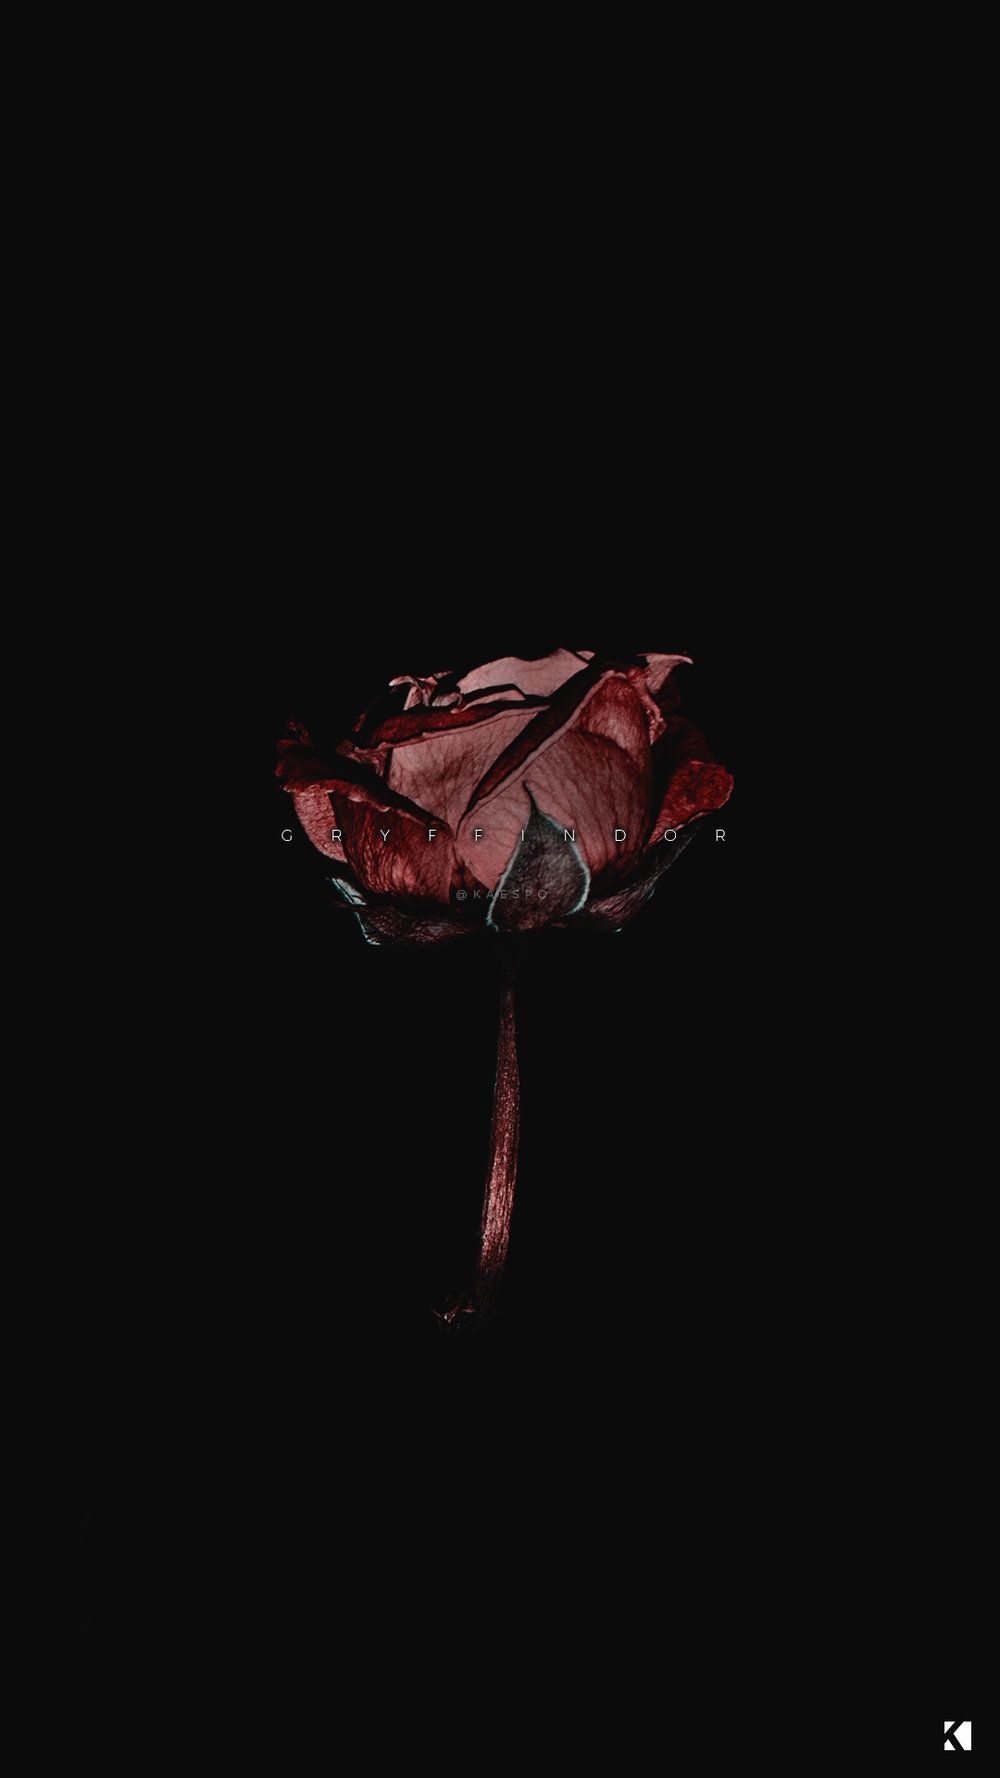 A red rose in the dark - Dark red